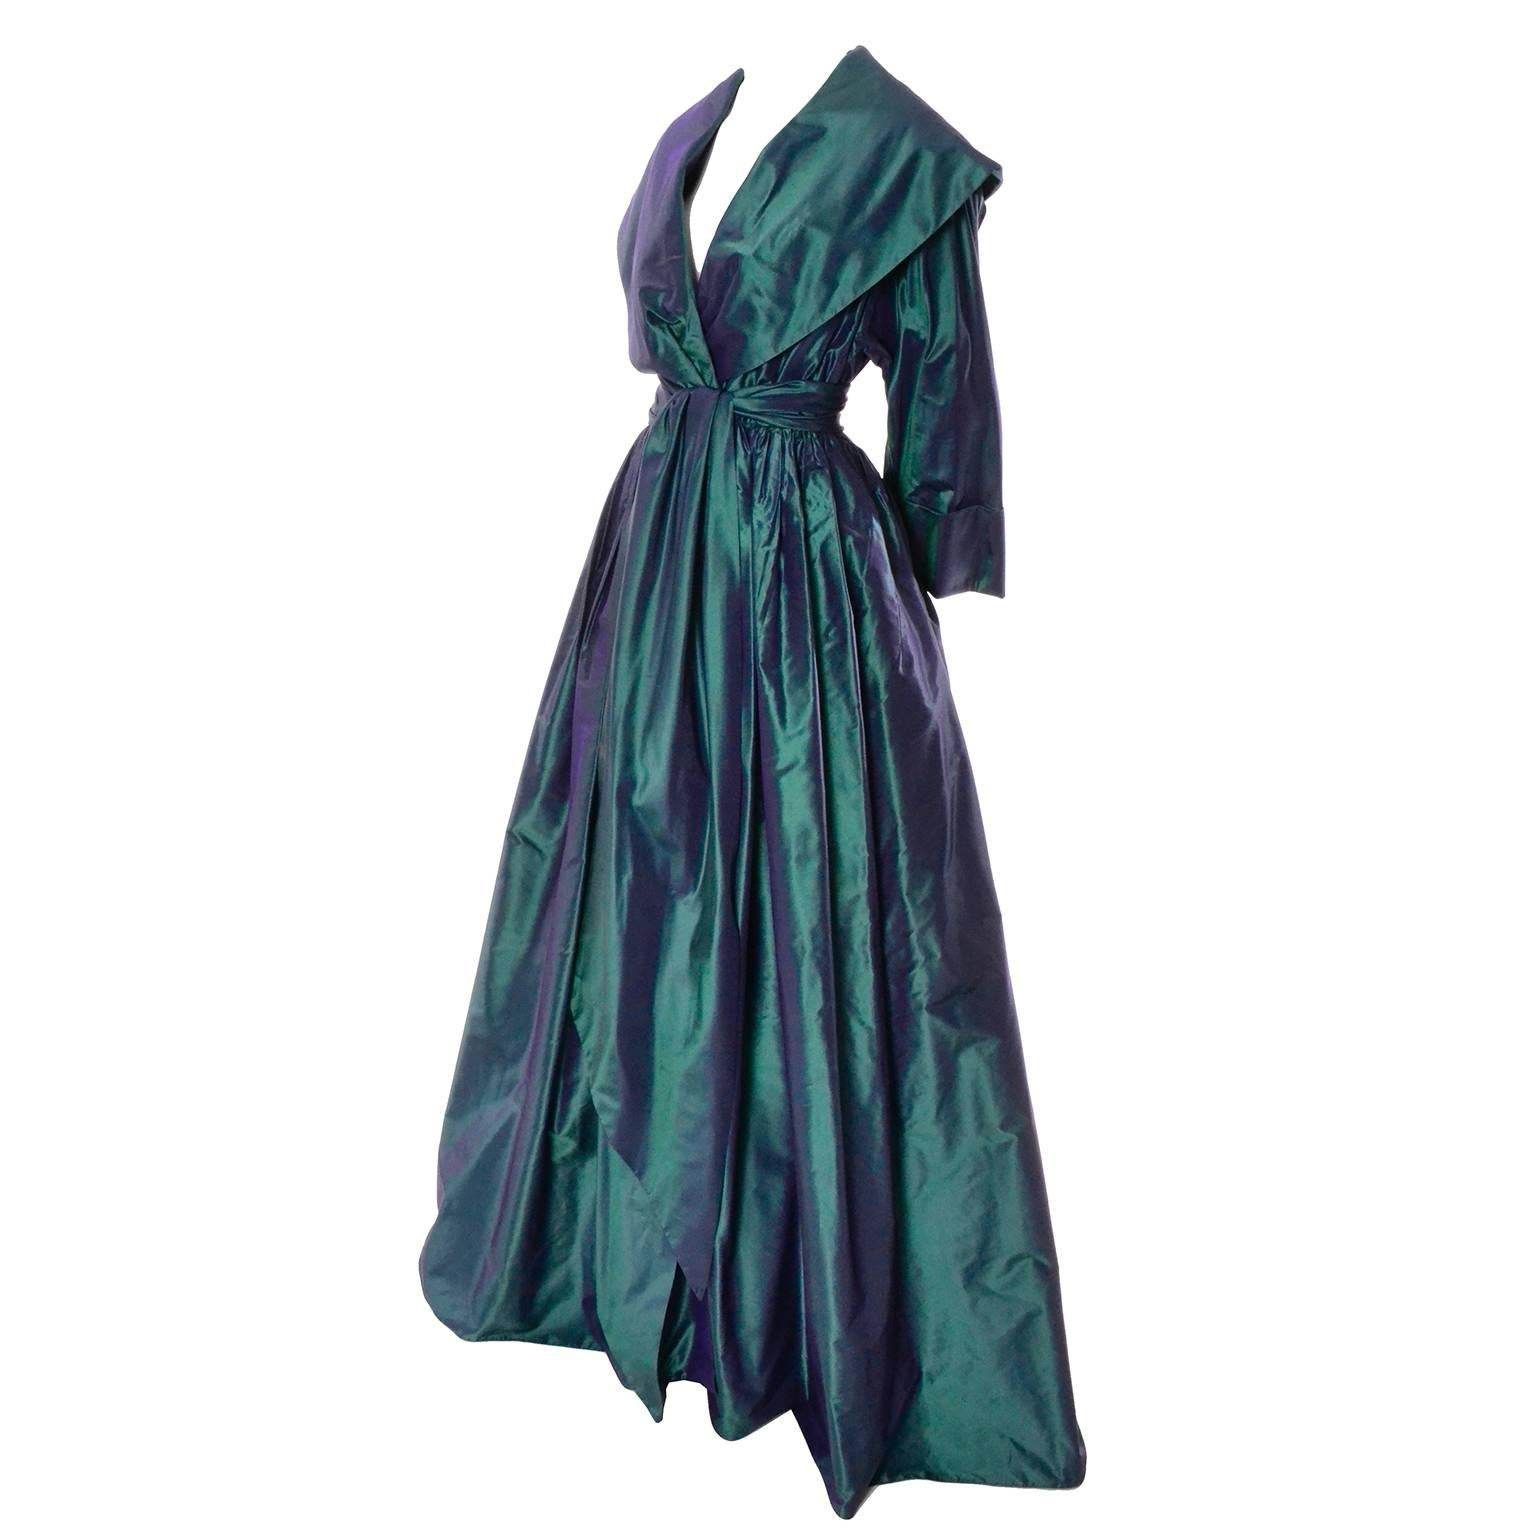 Carolyne Roehm Vintage Dress in Iridescent Green Taffeta From Bergdorf Goodman 1